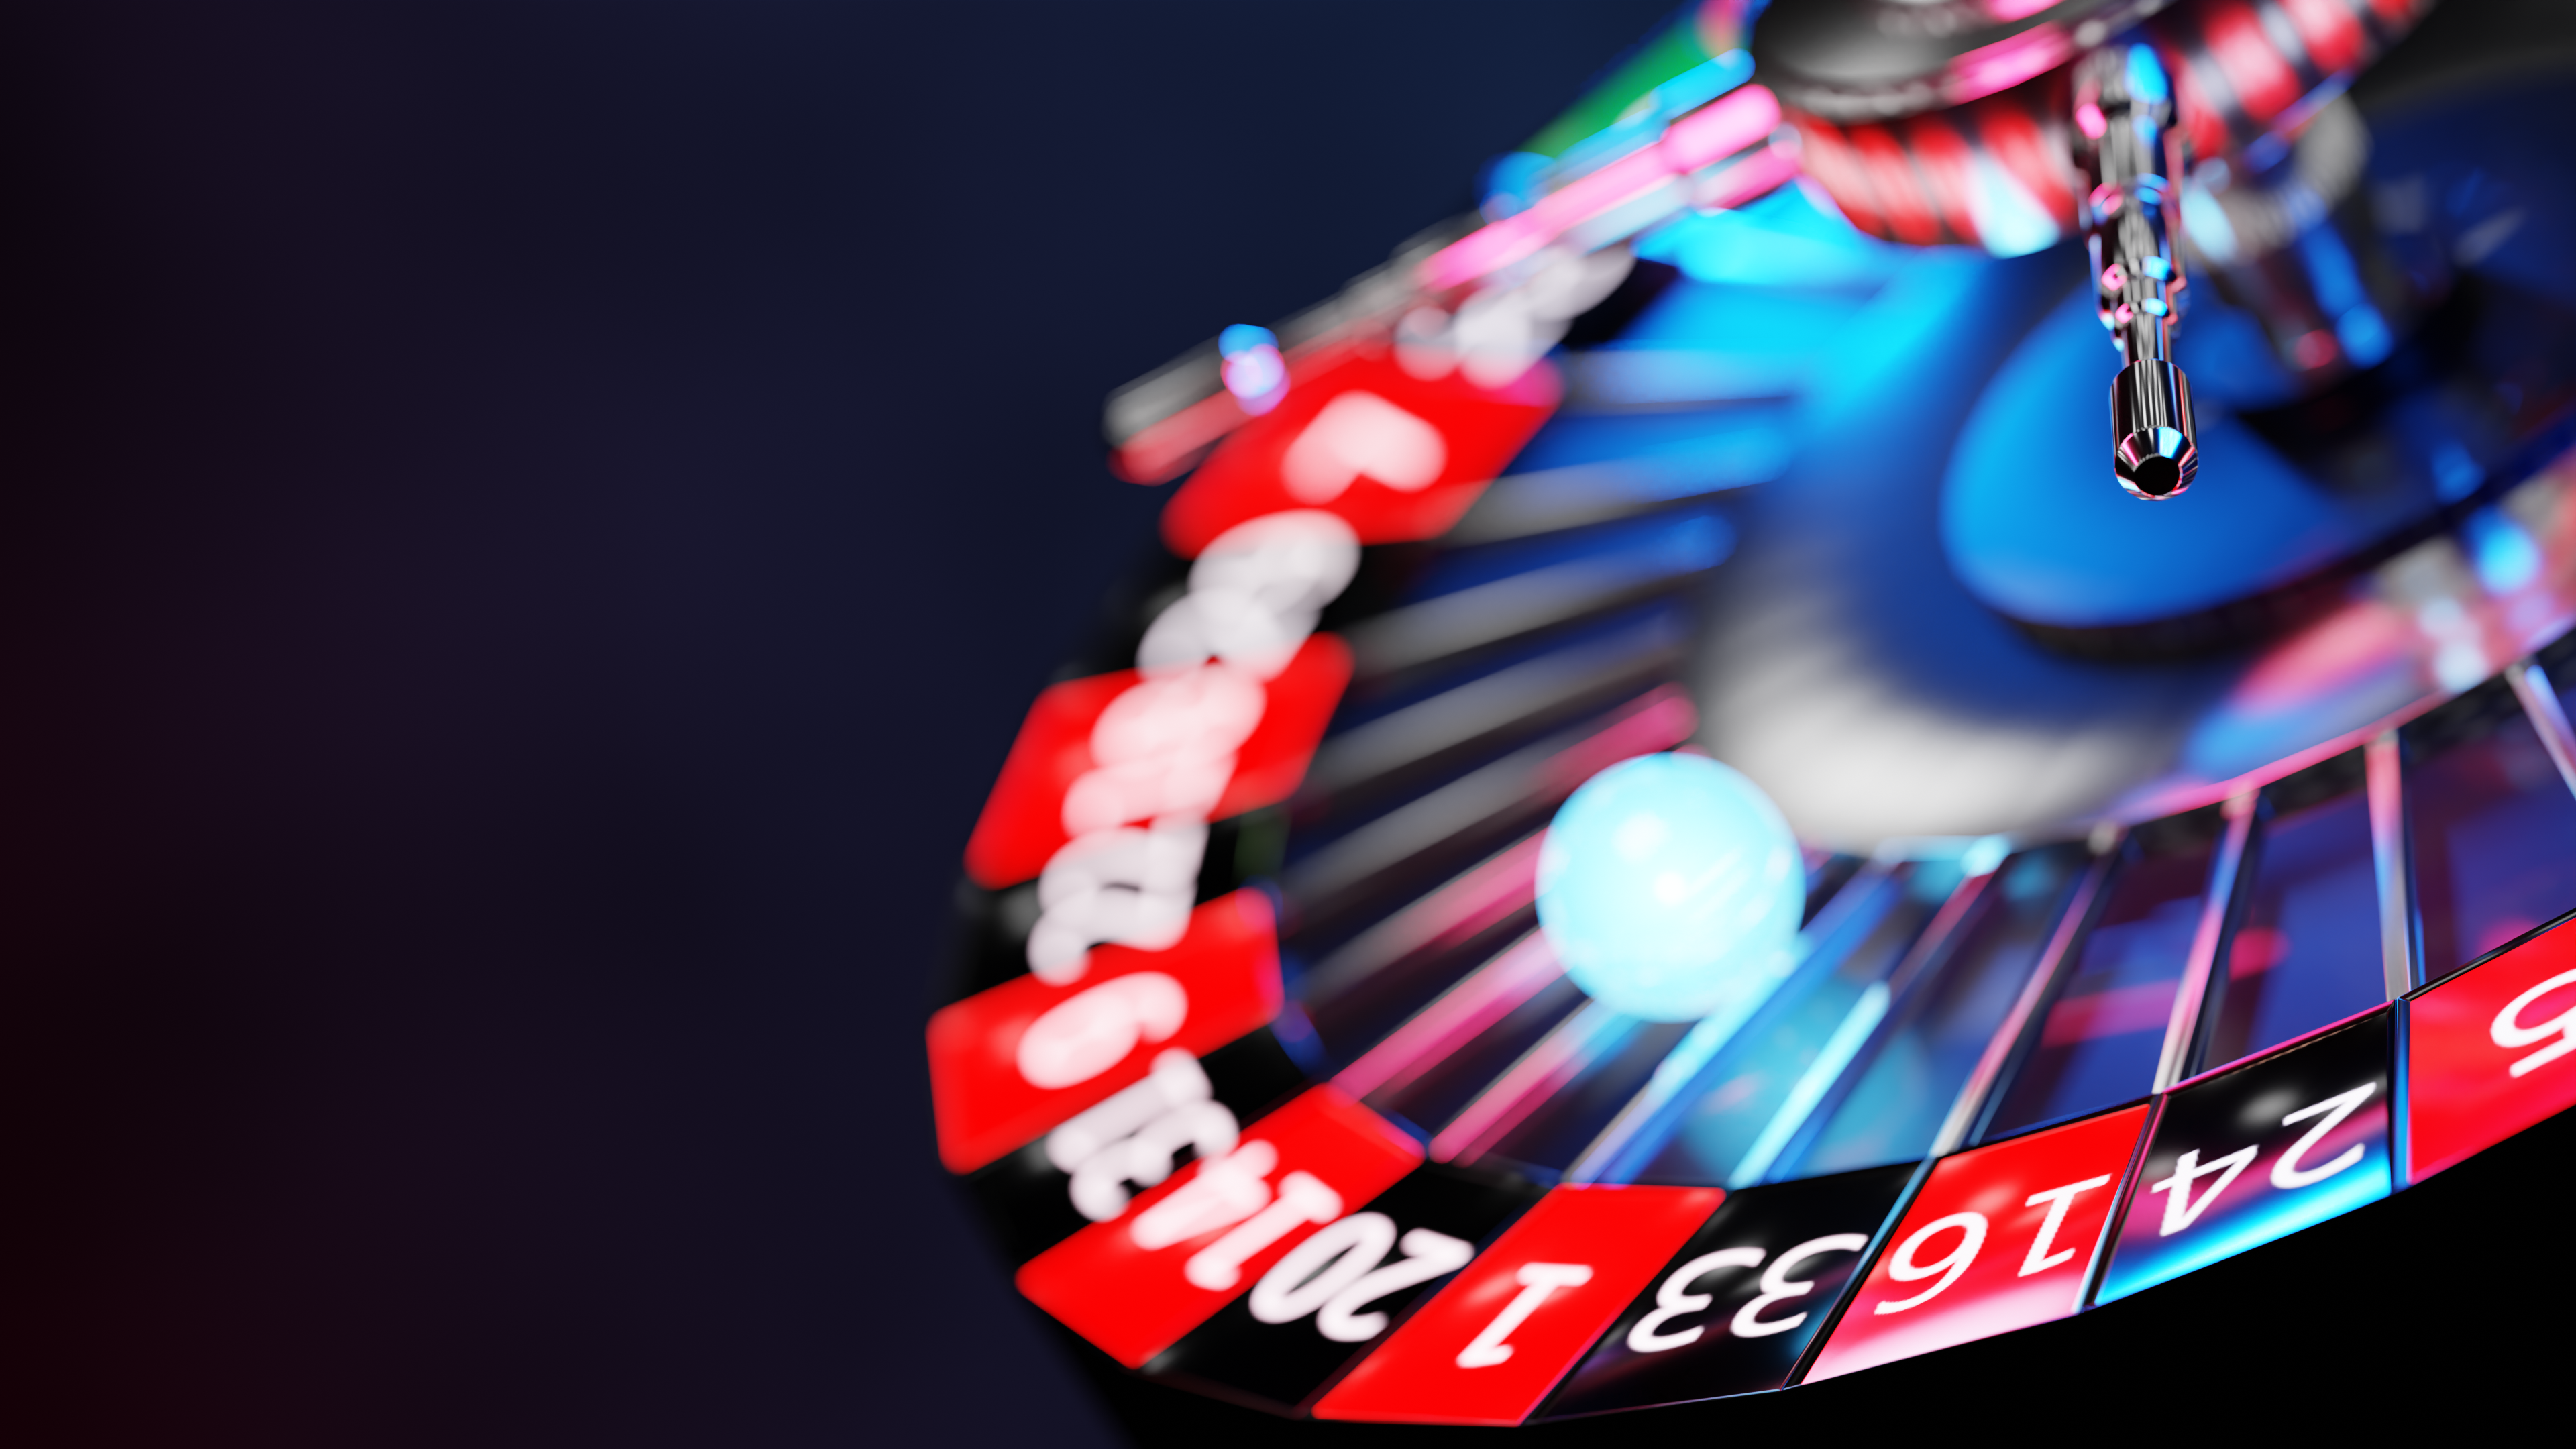 General 3840x2160 roulette casino numbers 4K CGI digital art minimalism dark red blue depth of field neon chrome gambling low key